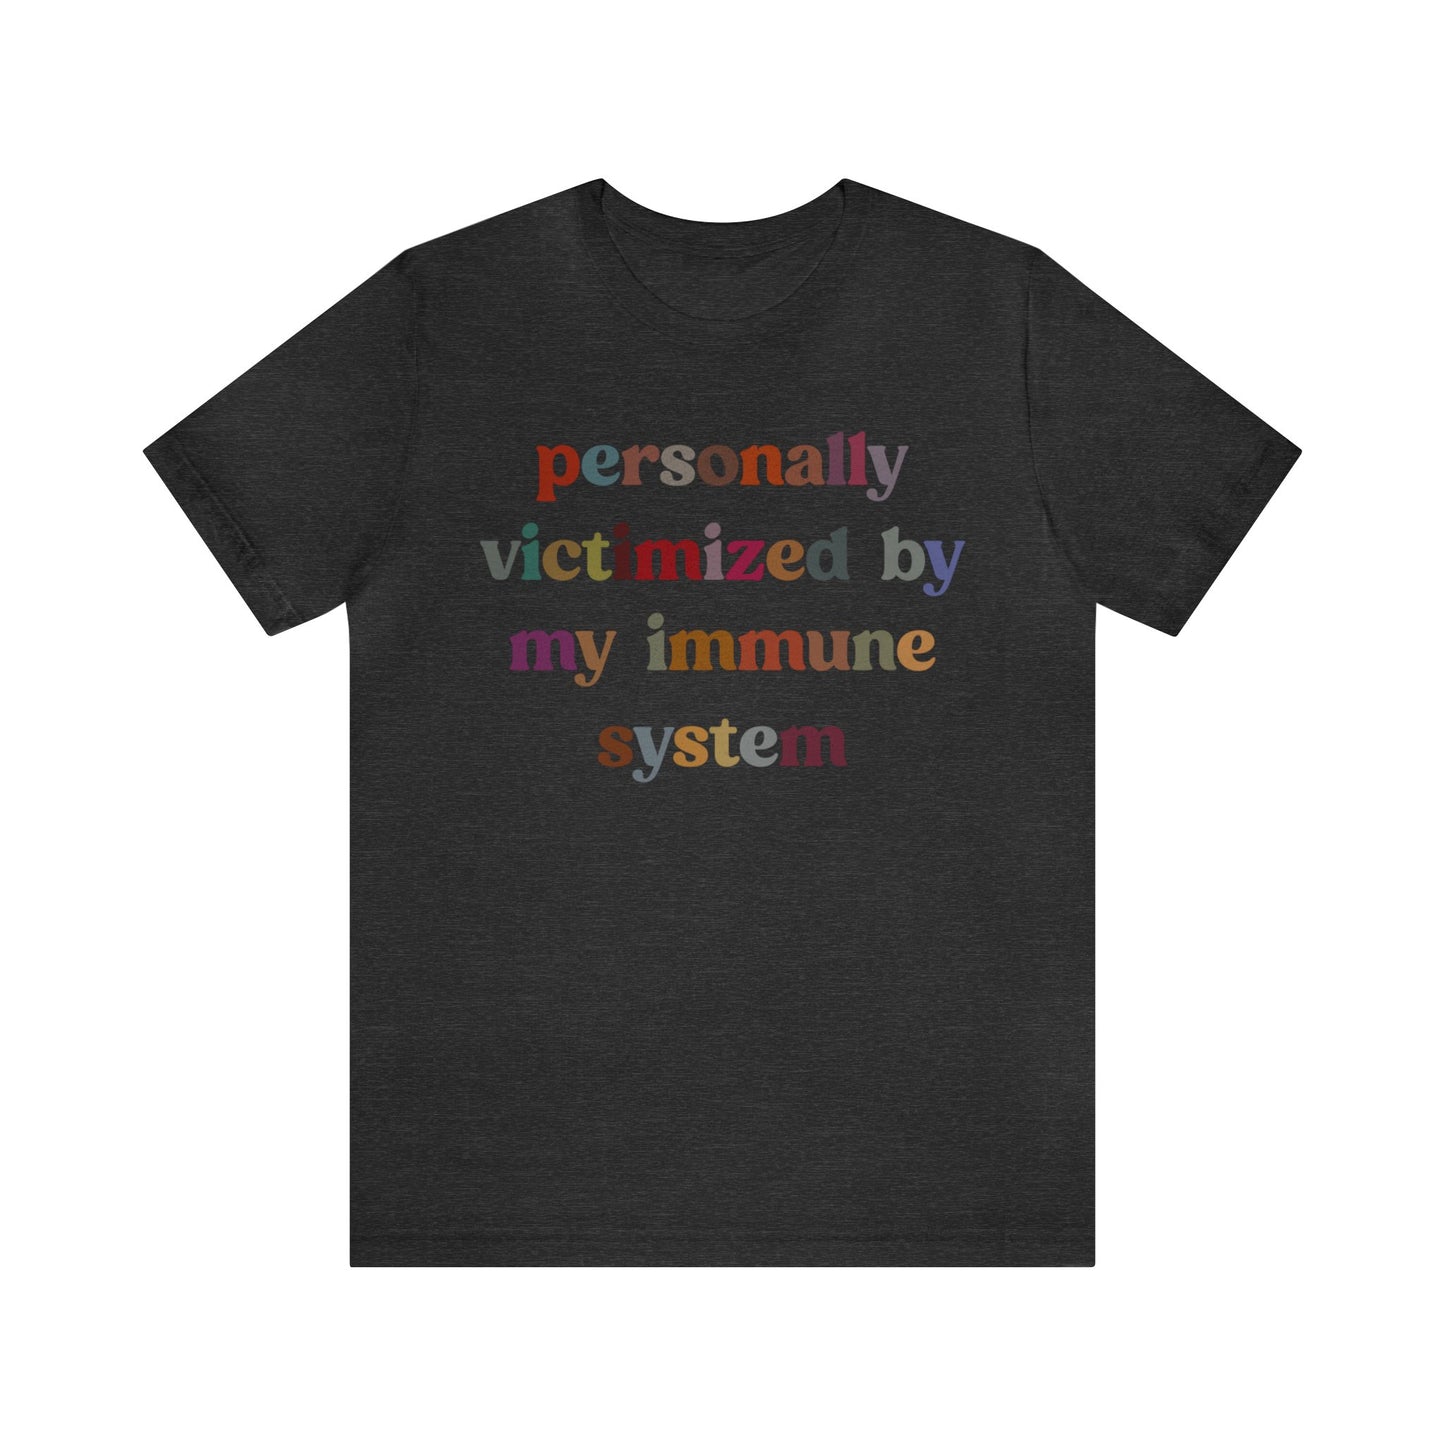 Personally Victimized By My Immune System Shirt, Autoimmune Disease Awareness Shirt, Shirt for Autoimmune Warriors, Women Funny Shirt, T1476